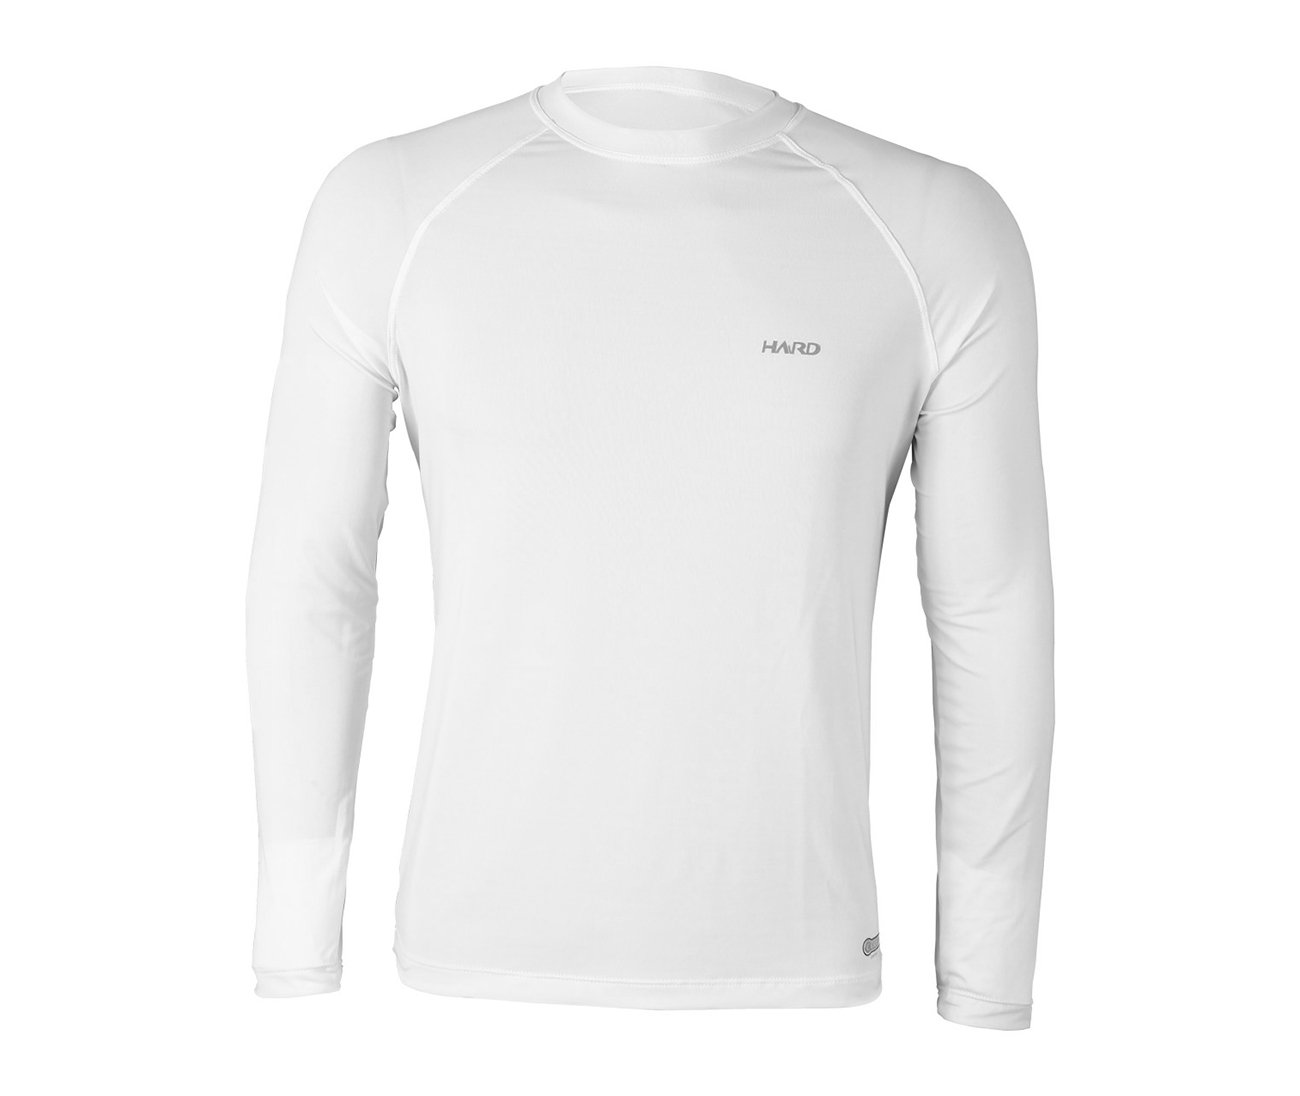 Camiseta Nanotec M.longa Fresh50 Branco Leggerissimo - Hard - G